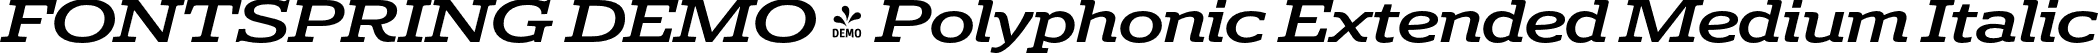 FONTSPRING DEMO - Polyphonic Extended Medium Italic font | Fontspring-DEMO-polyphonic-extendedmediumitalic.otf